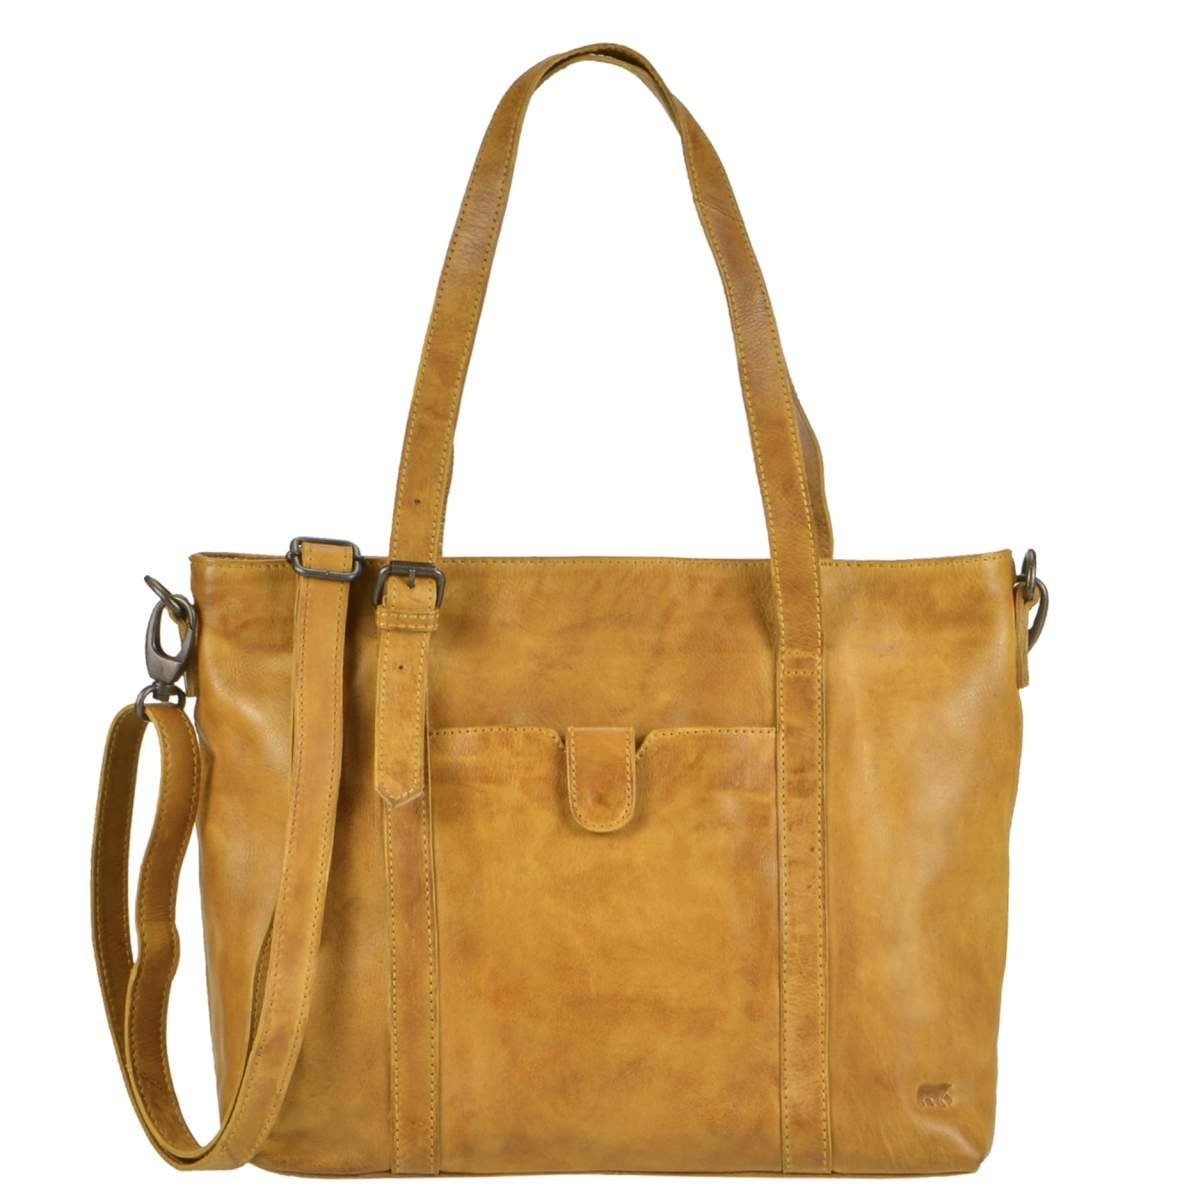 Bear Design Umhängetasche Diede, Handtasche, Shopper 34x27cm, Schultertasche, Leder in ocker gelb